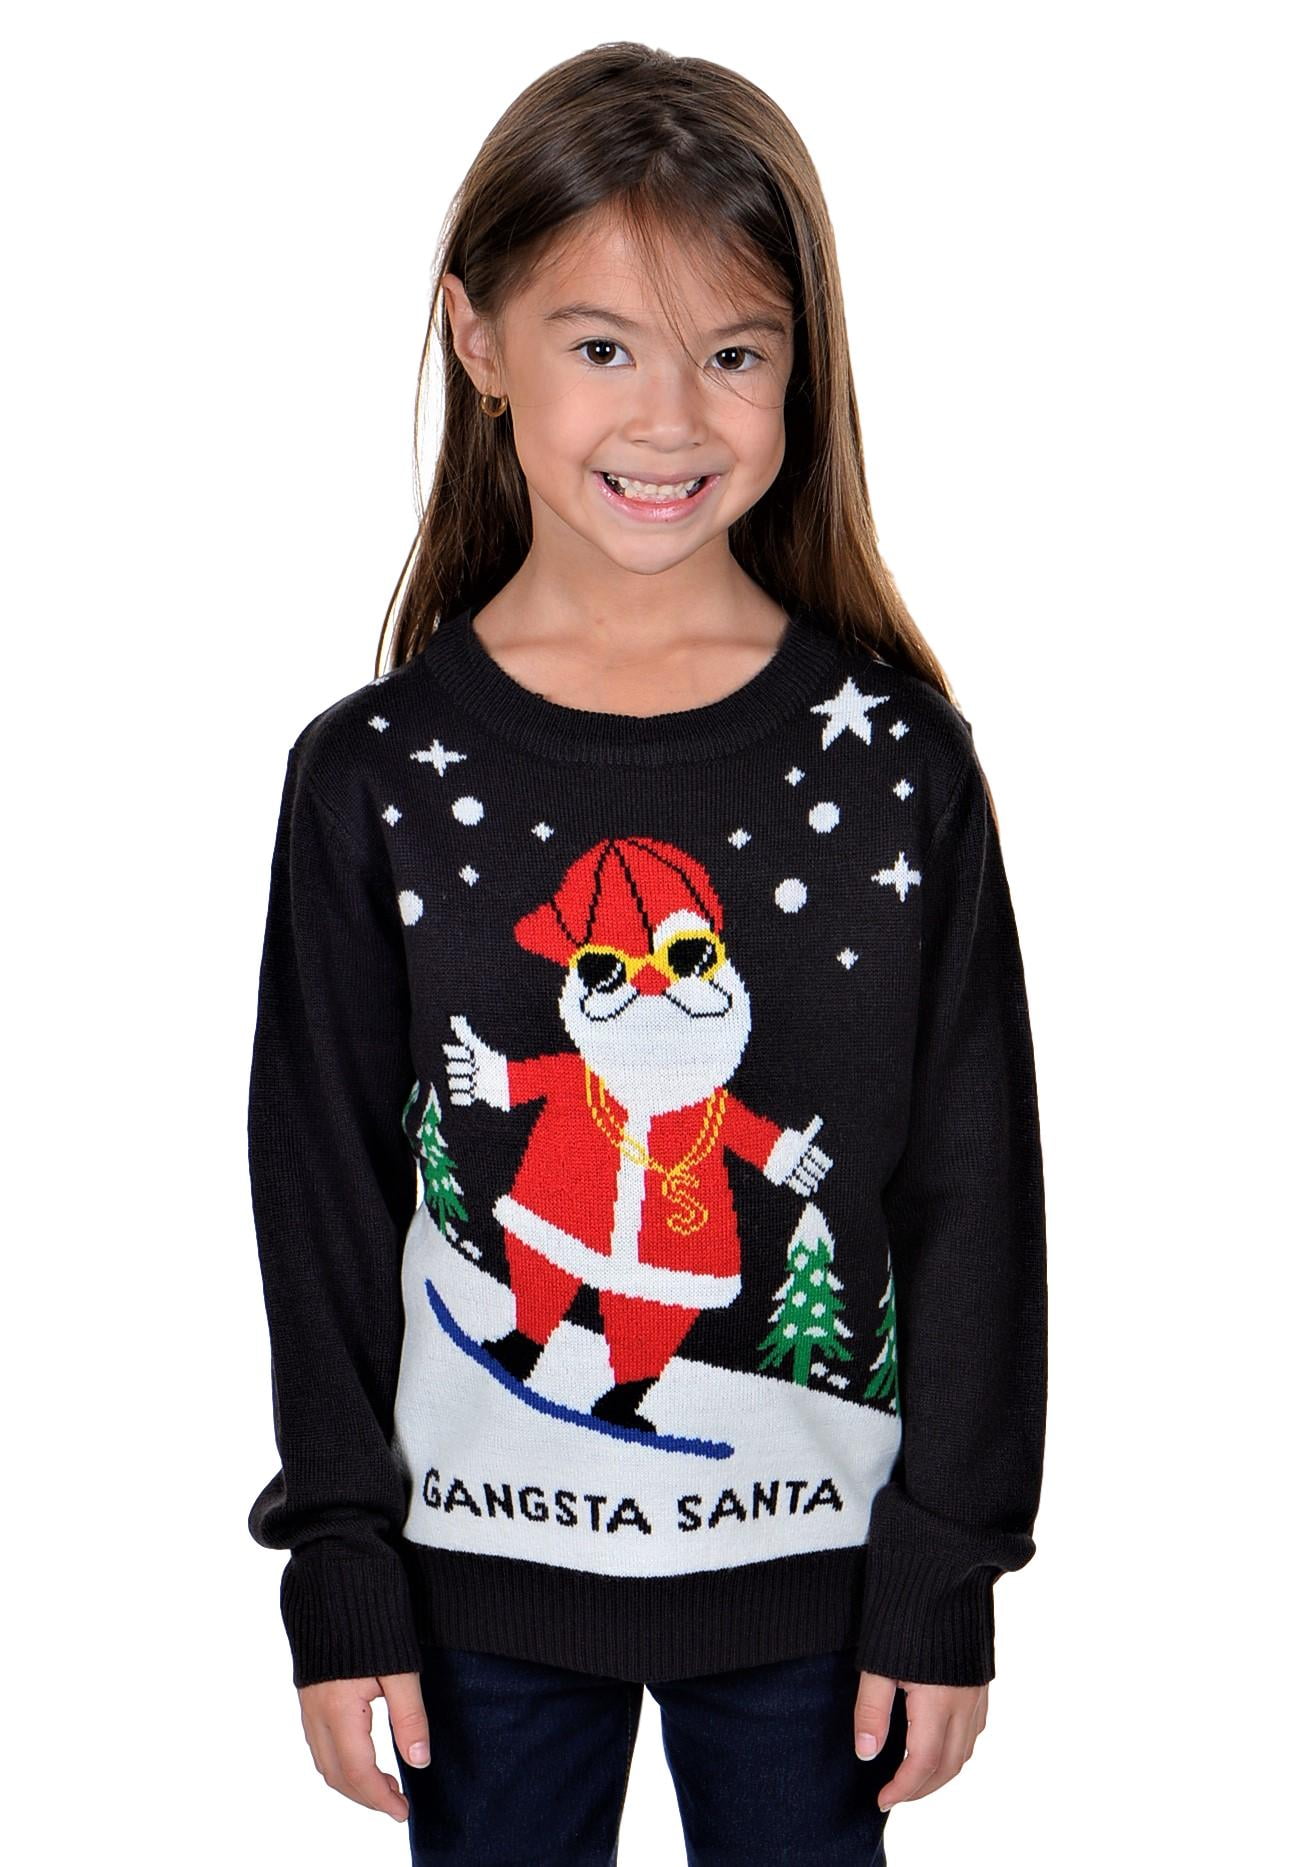 Tstars Girls Ugly Christmas Sweater Holiday Penguin Santa Cute Toddler Sweater